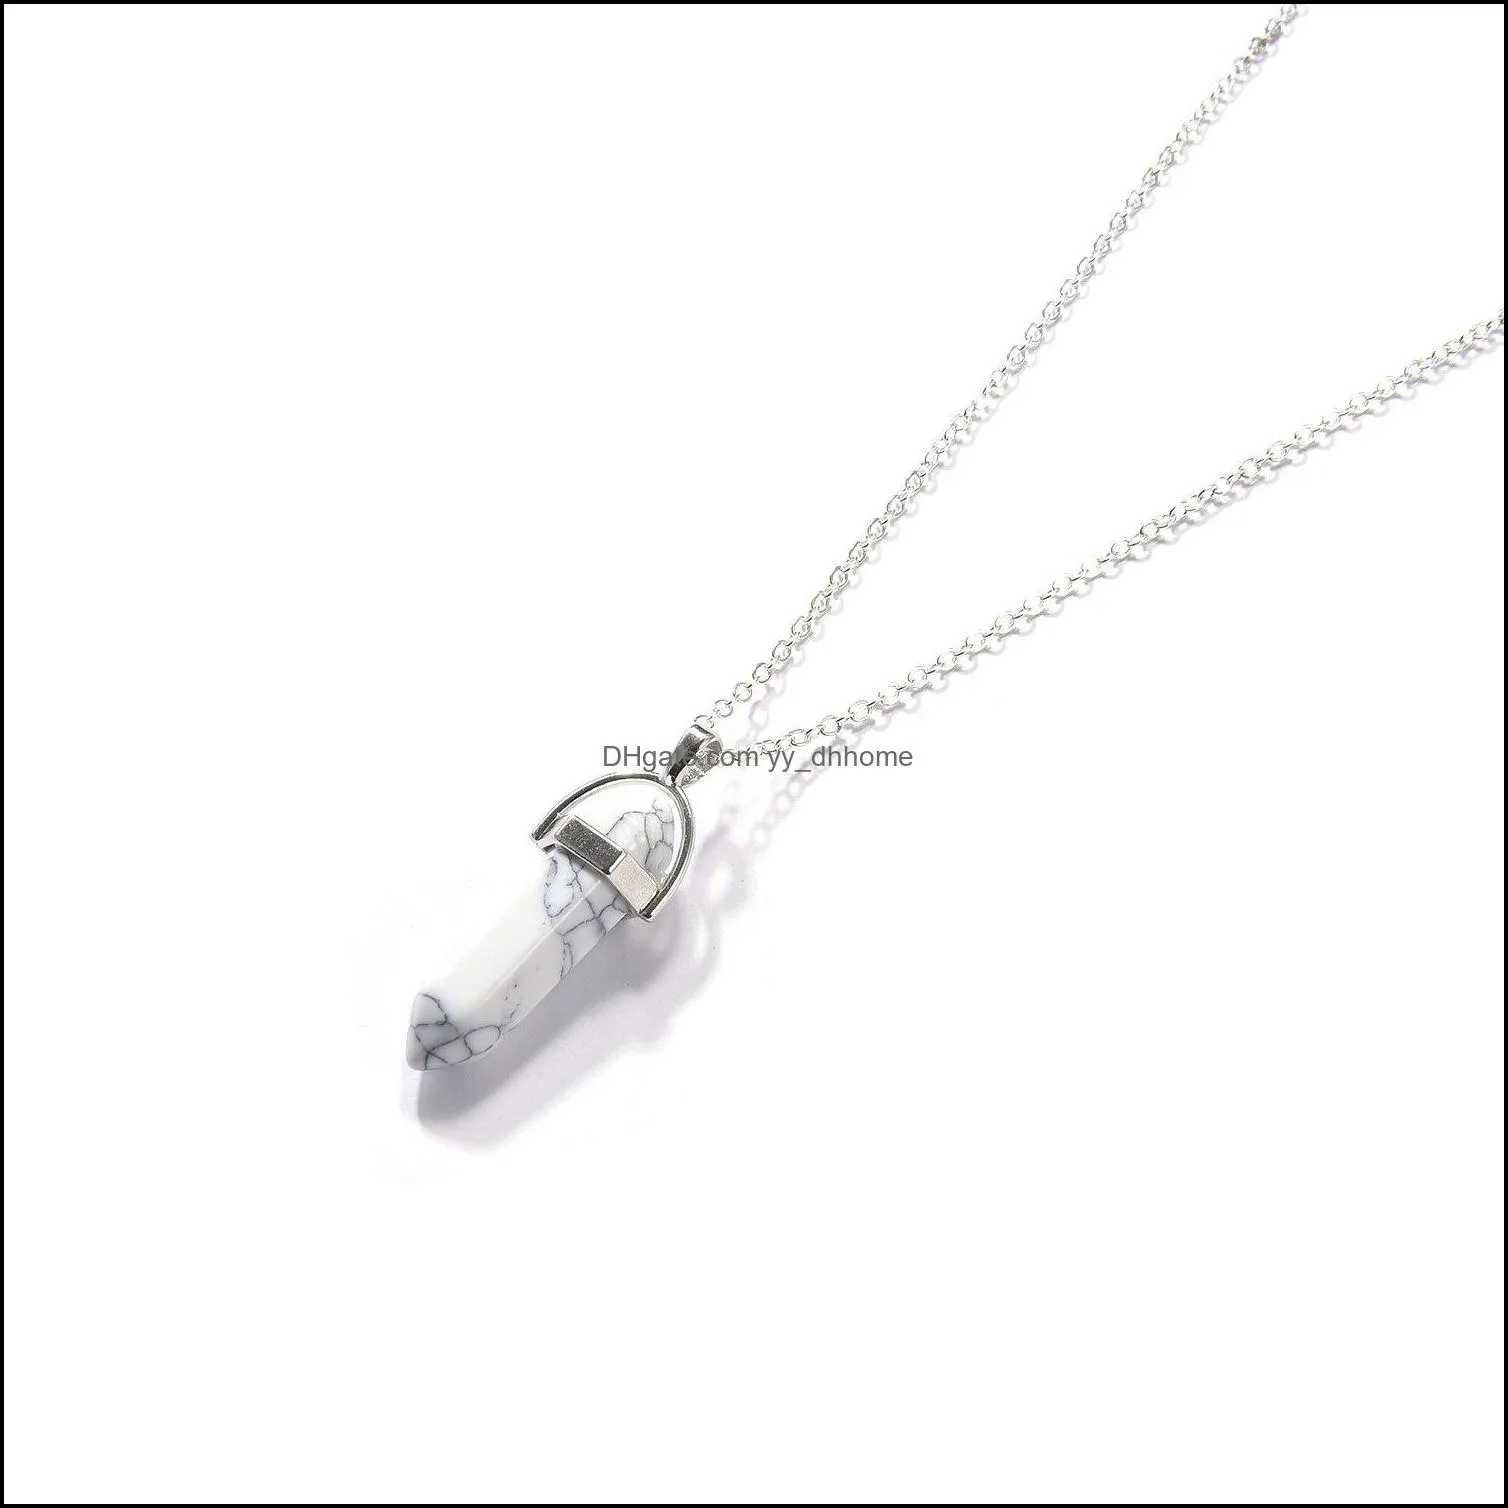 hexagonal prism bullet pendant necklace natural stone opal turquoises quartz healing reiki pendulum necklace for women jewelry